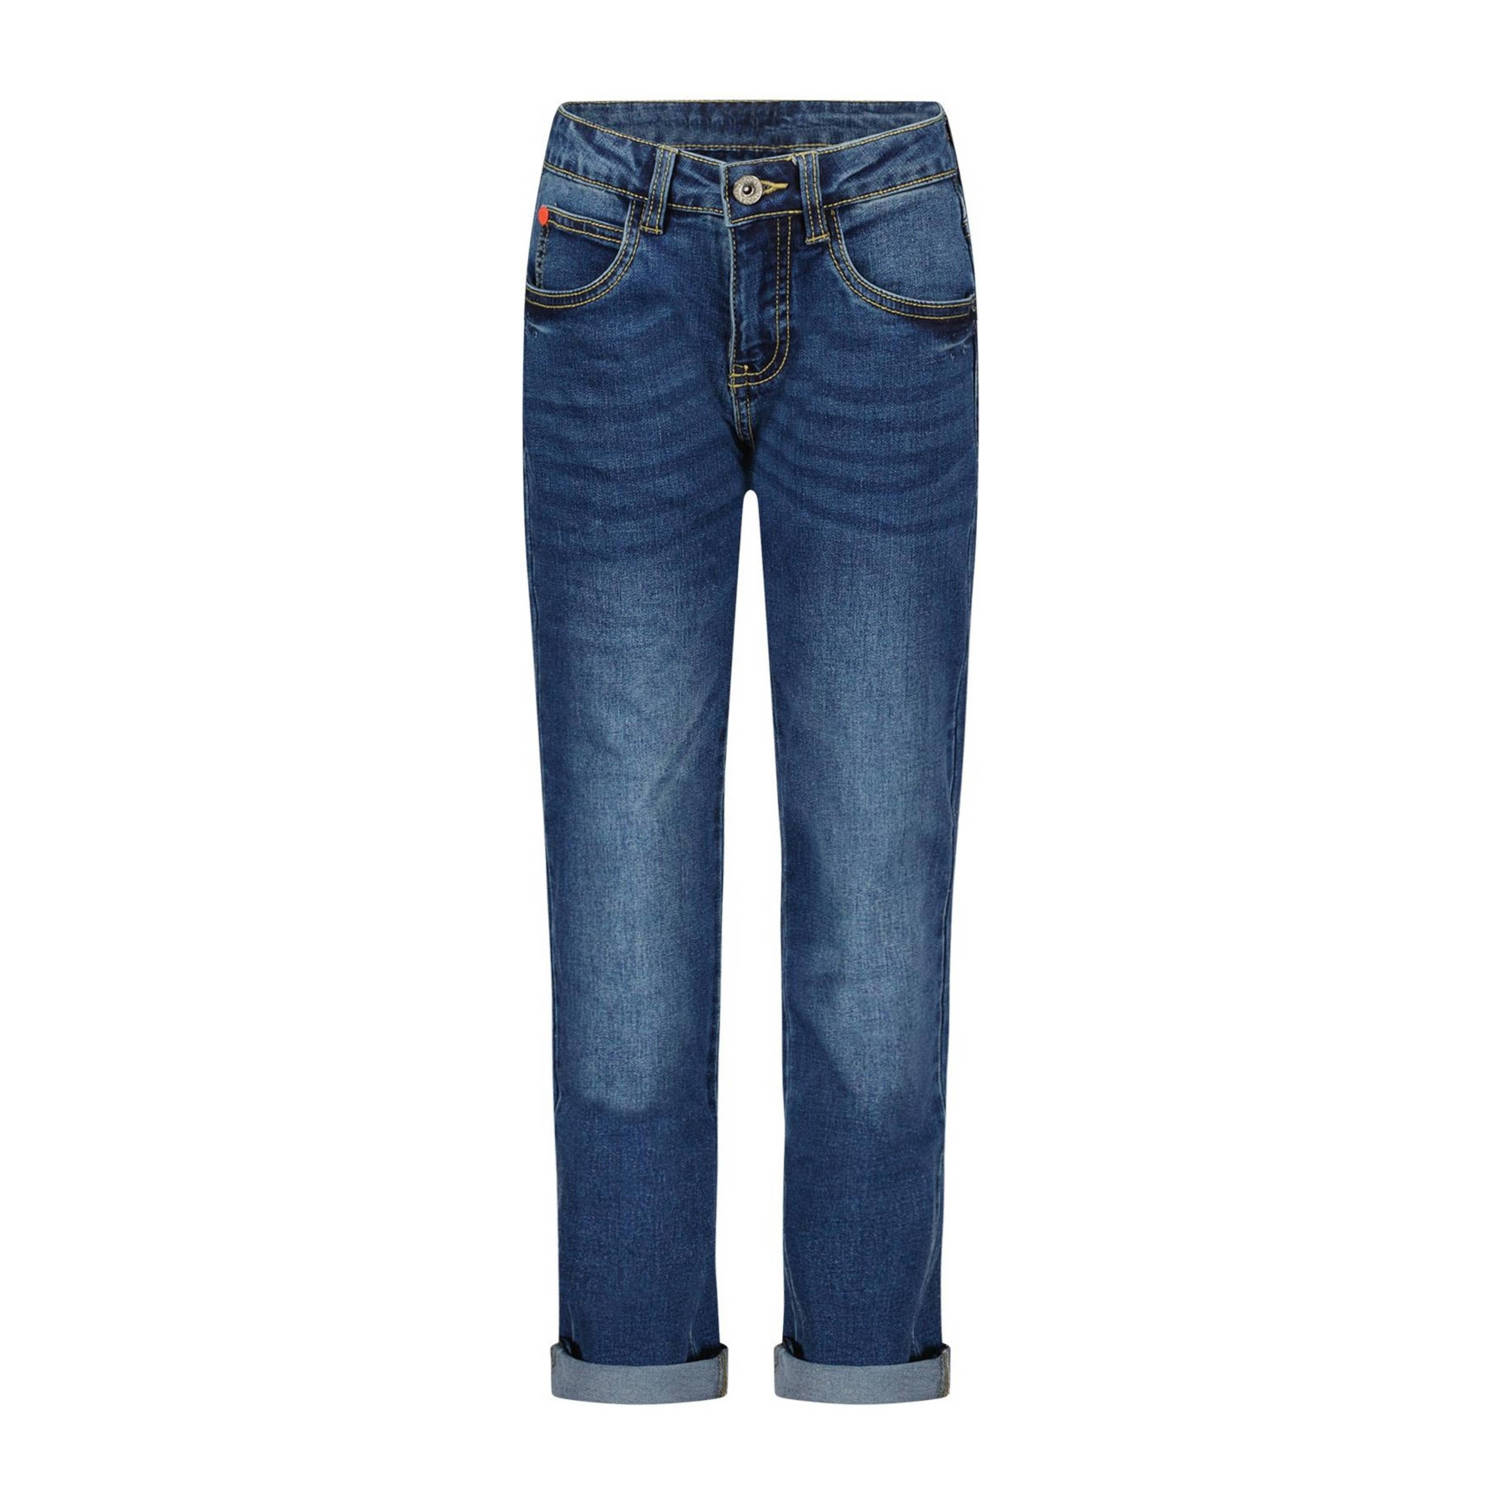 TYGO & vito straight fit jeans Boaz medium blue denim Blauw Jongens Katoen 152